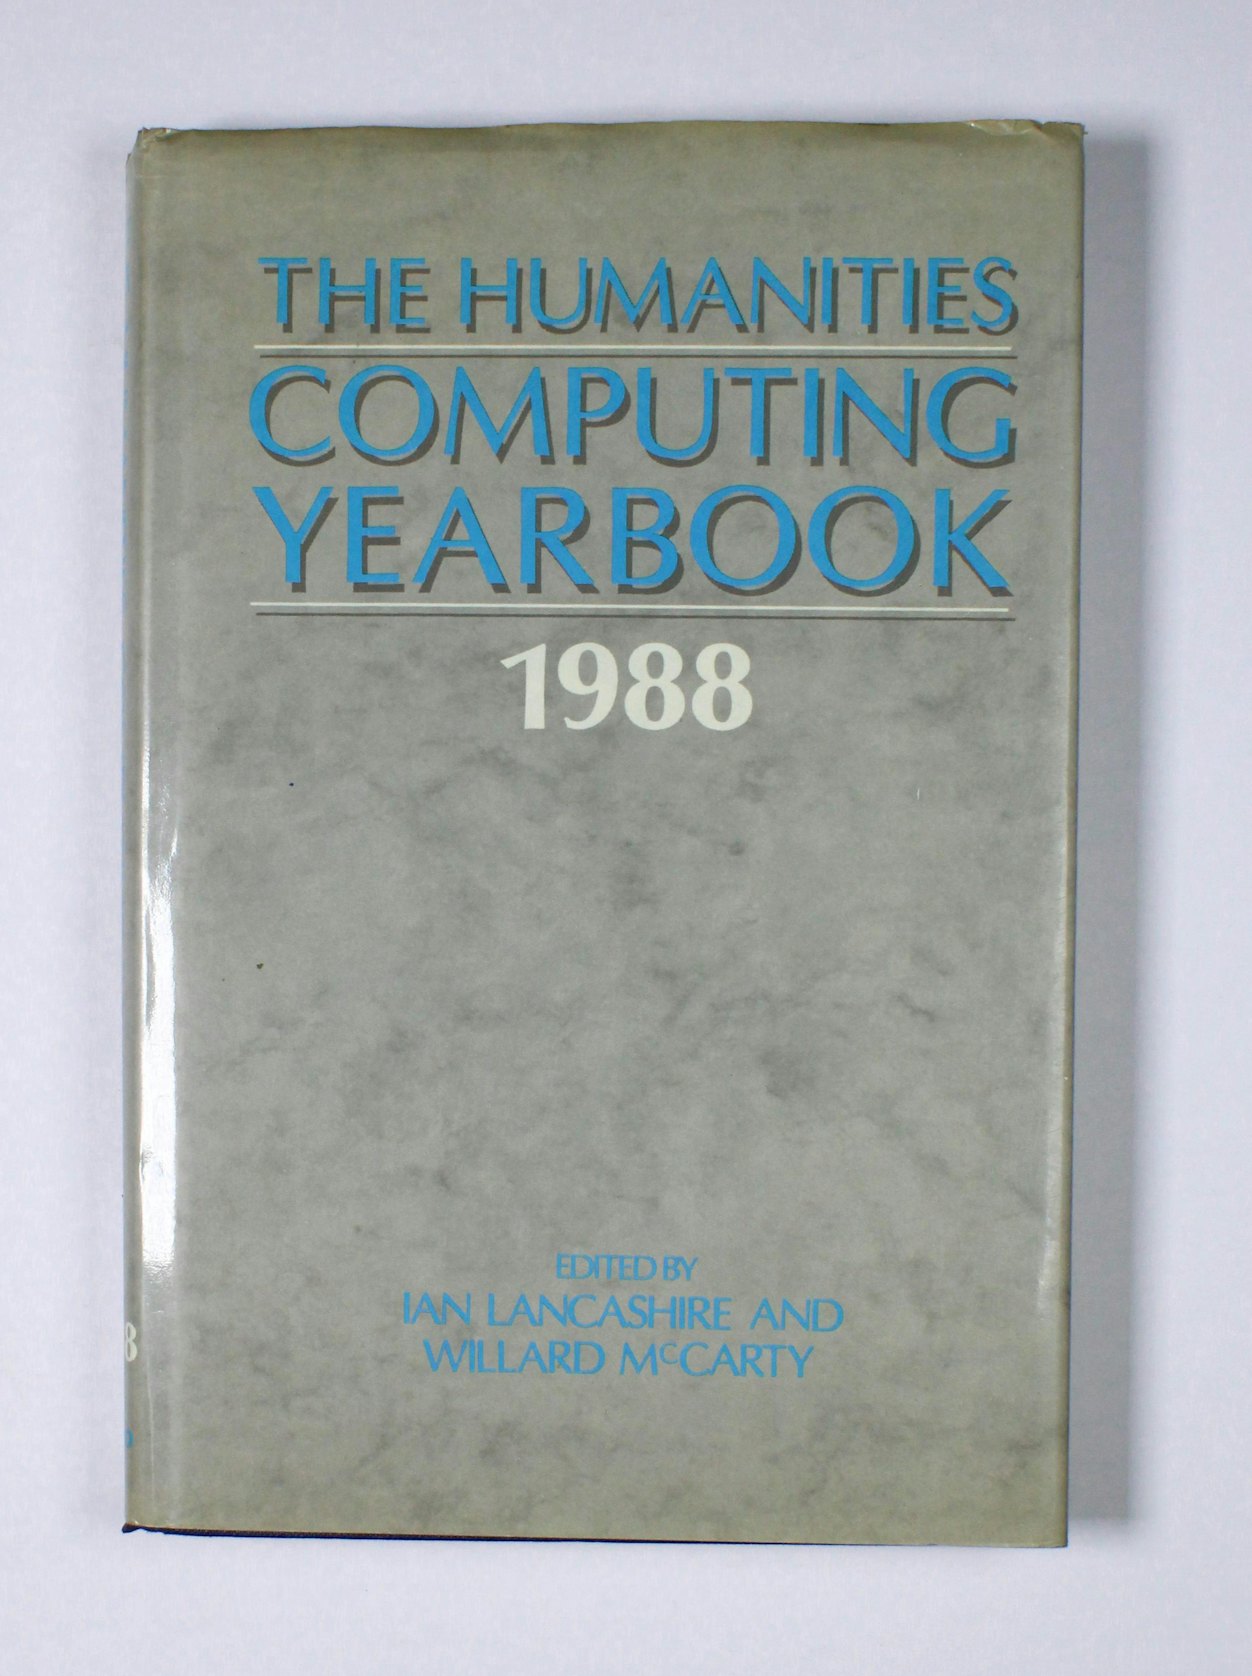 The Humanities Computing Yearbook - 1988